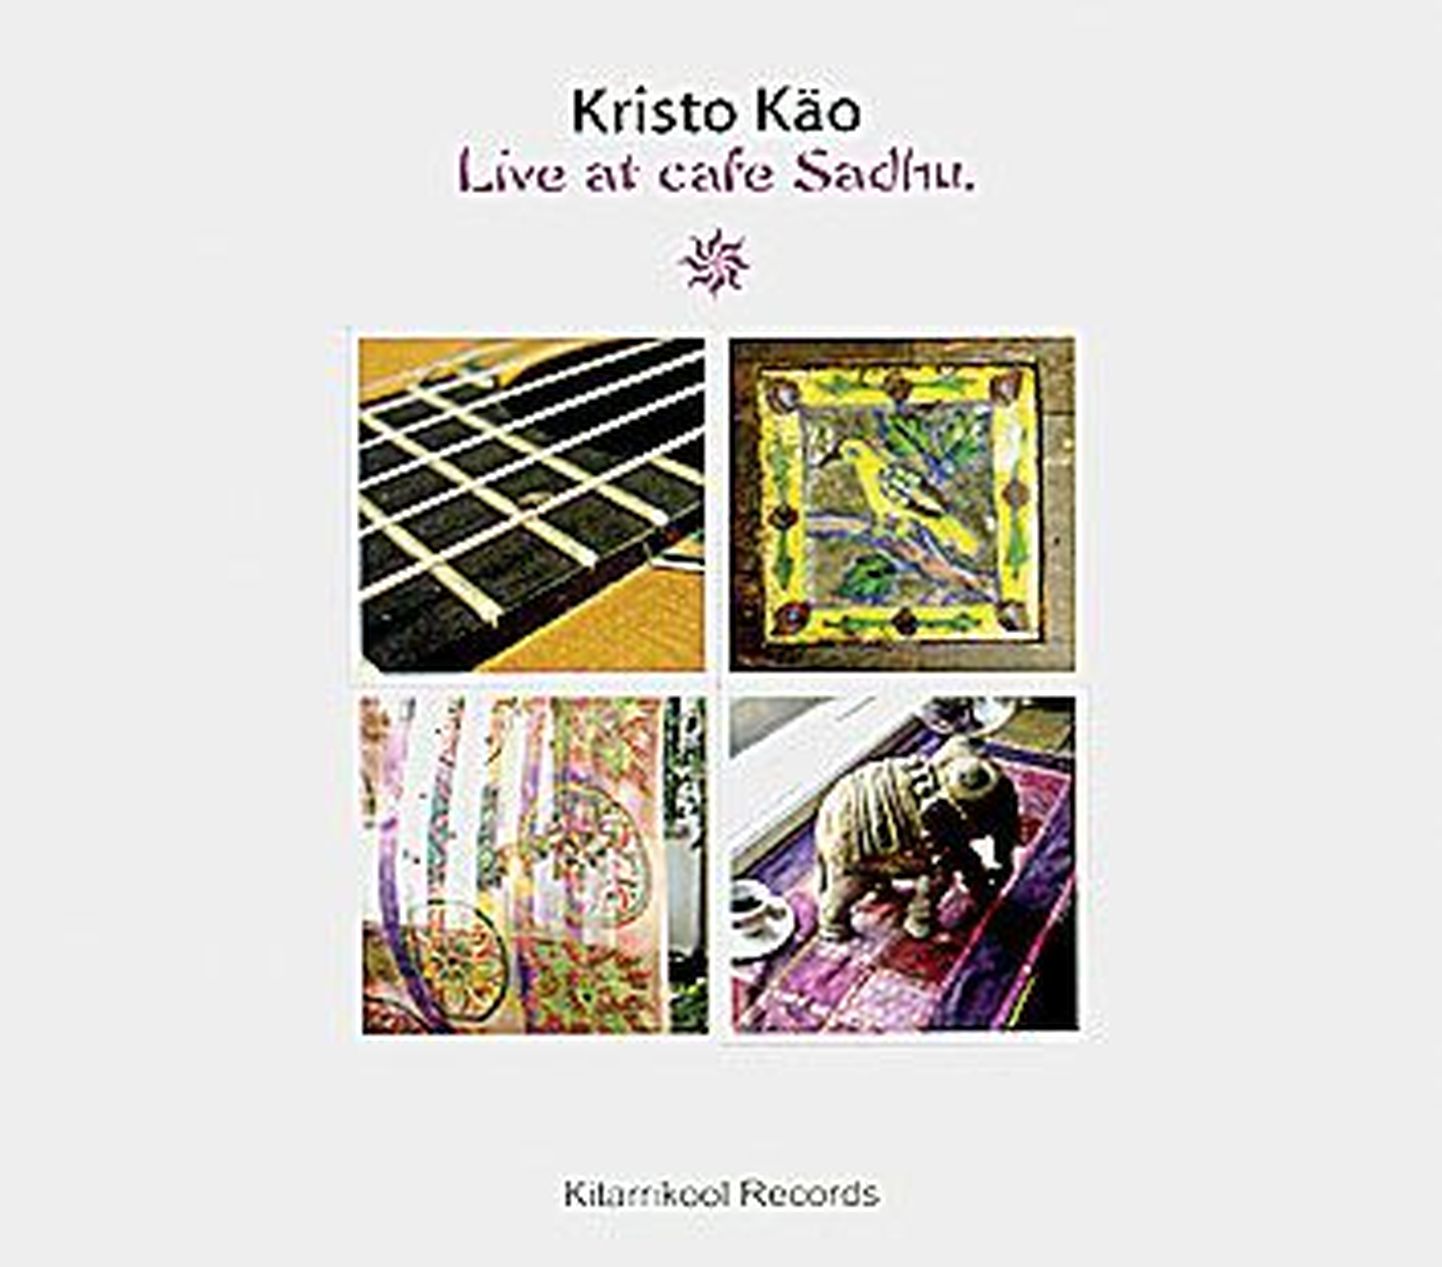 Kristo Käo, «Live at cafe Sadhu», 
Kitarrikool Records, 2010.